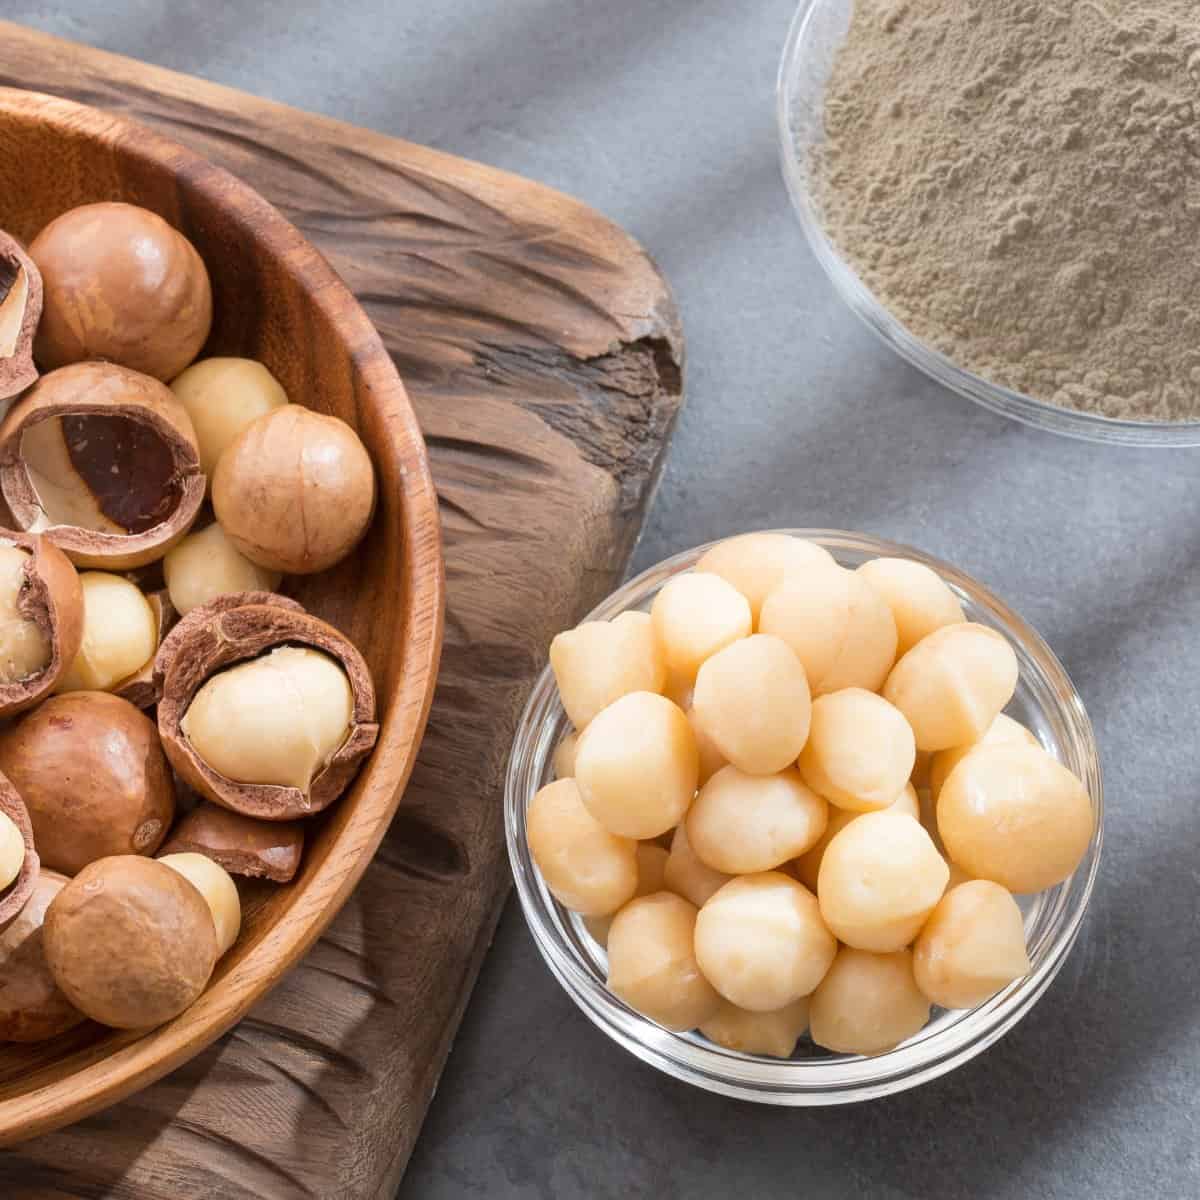 What is Macadamia flour